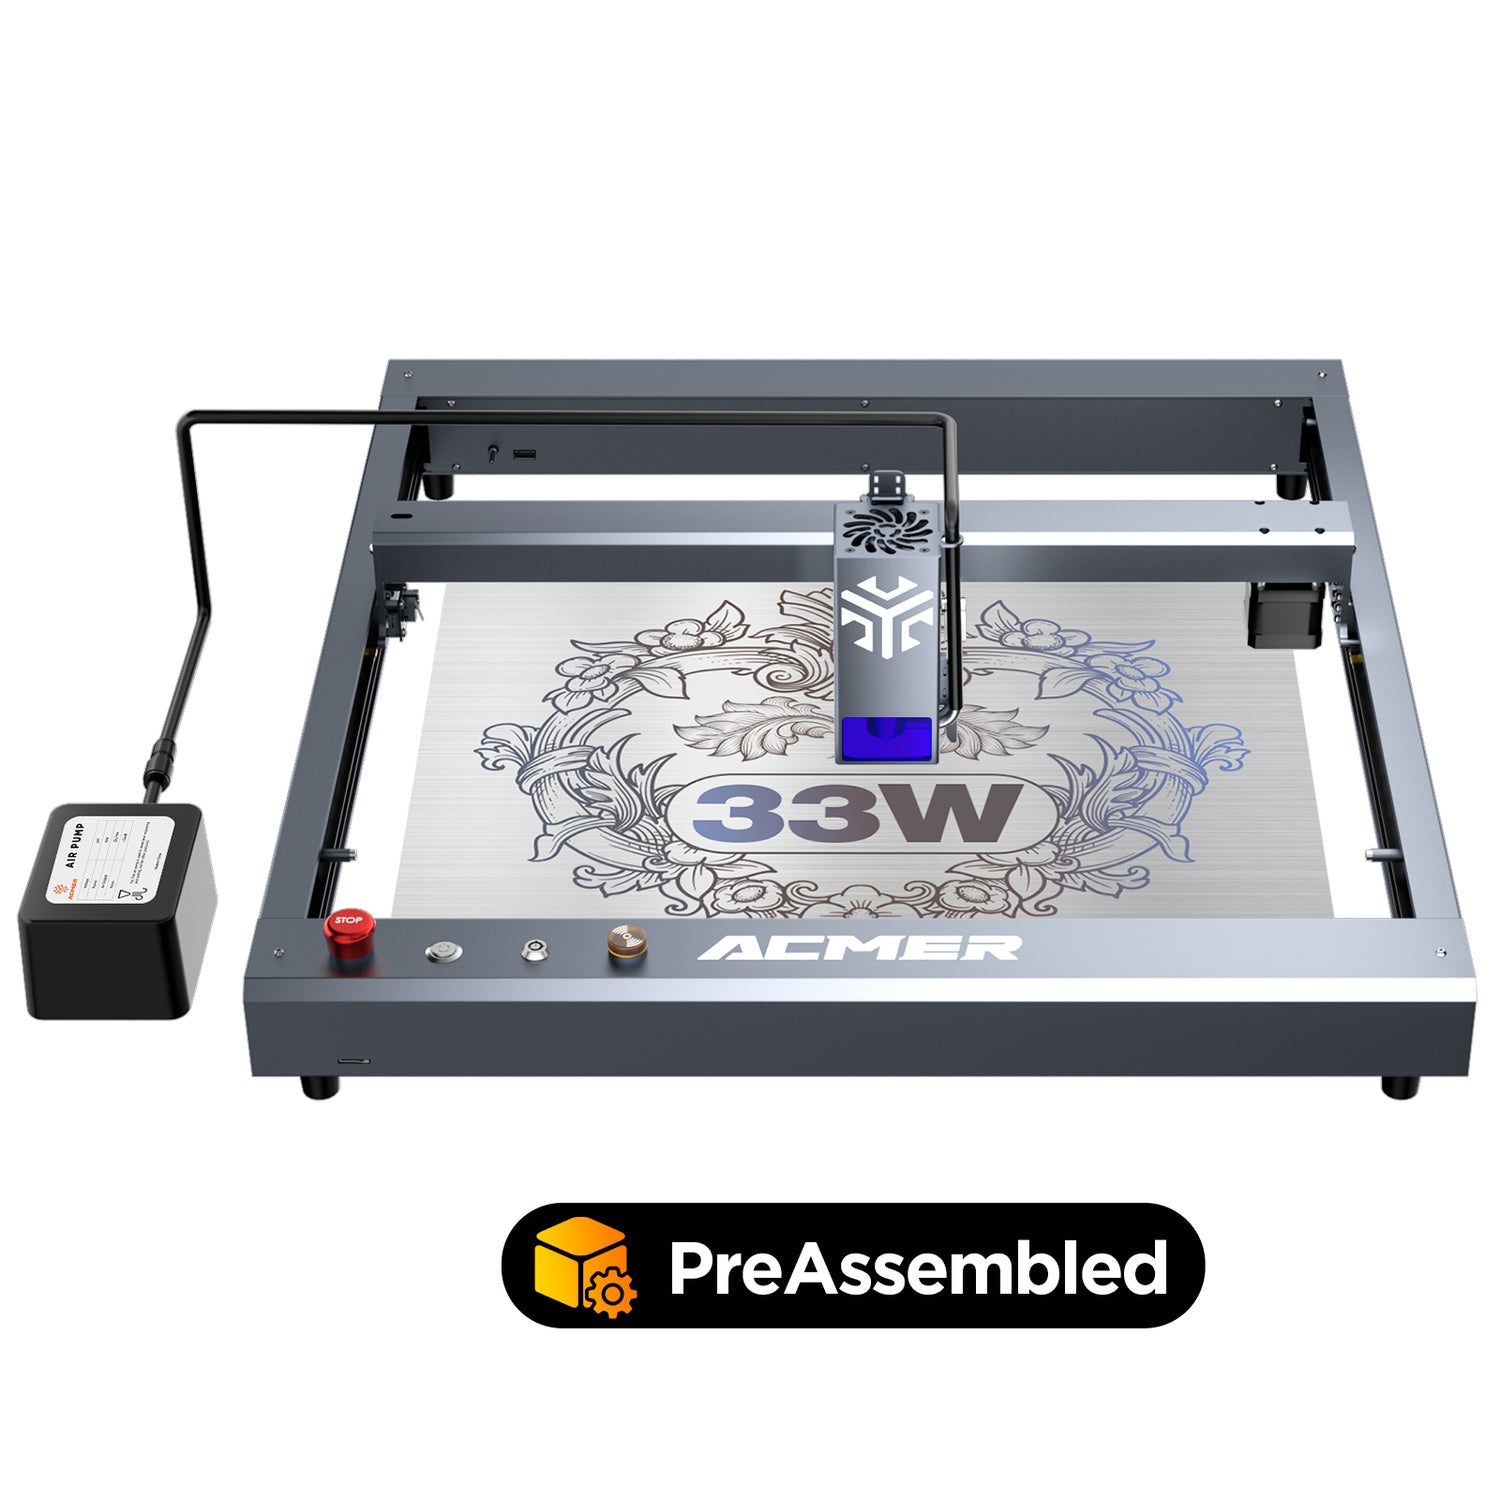 Rotary Kit Pro Upgradation DIY Laser Engraving Machine for